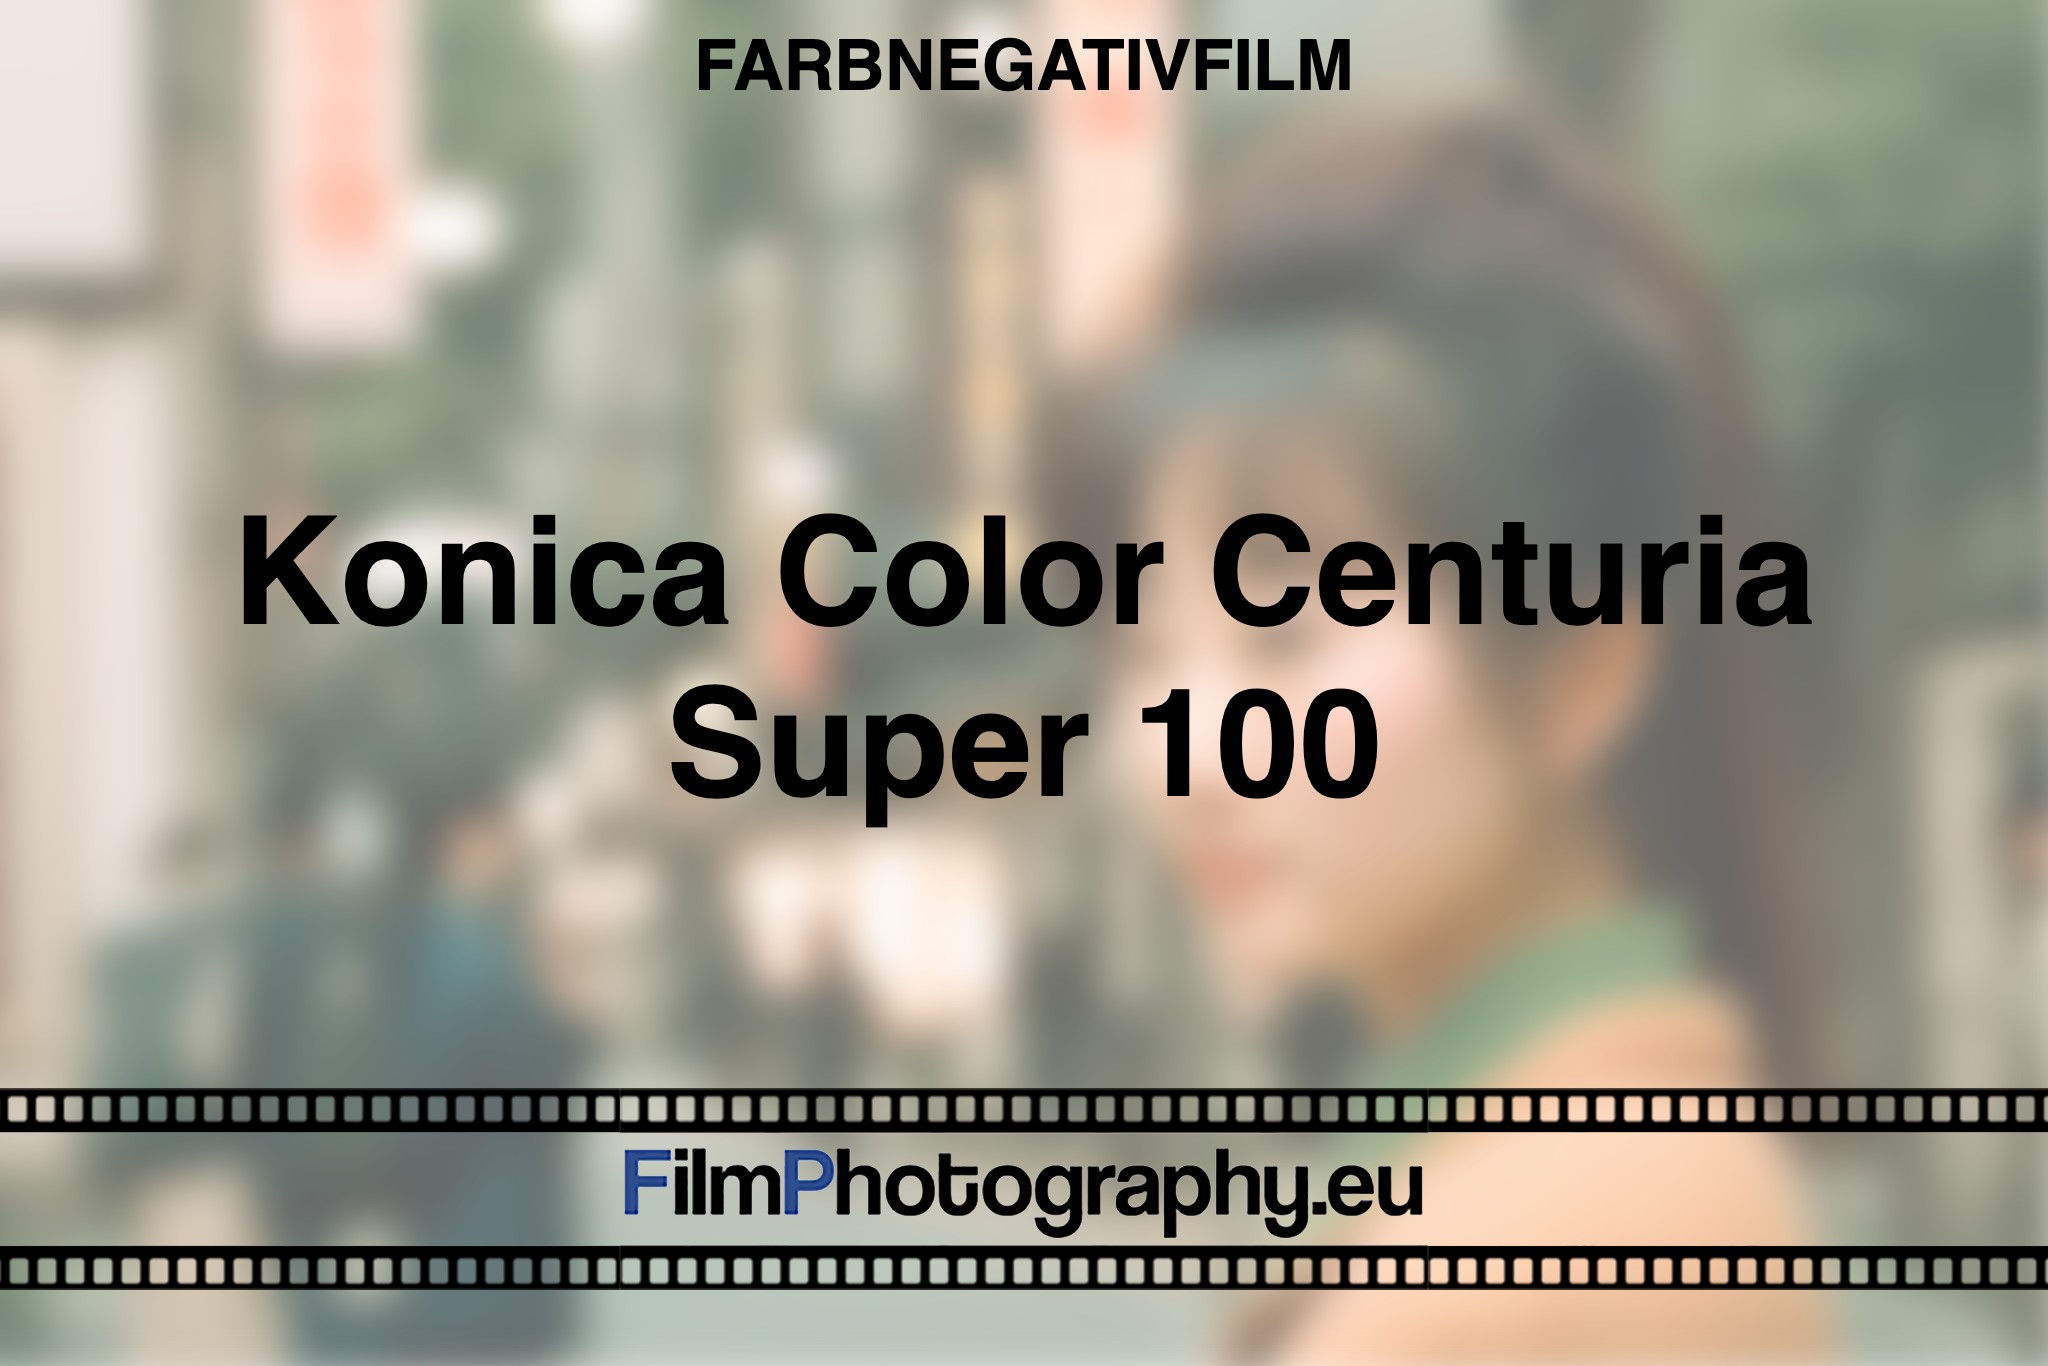 konica-color-centuria-super-100-farbnegativfilm-bnv